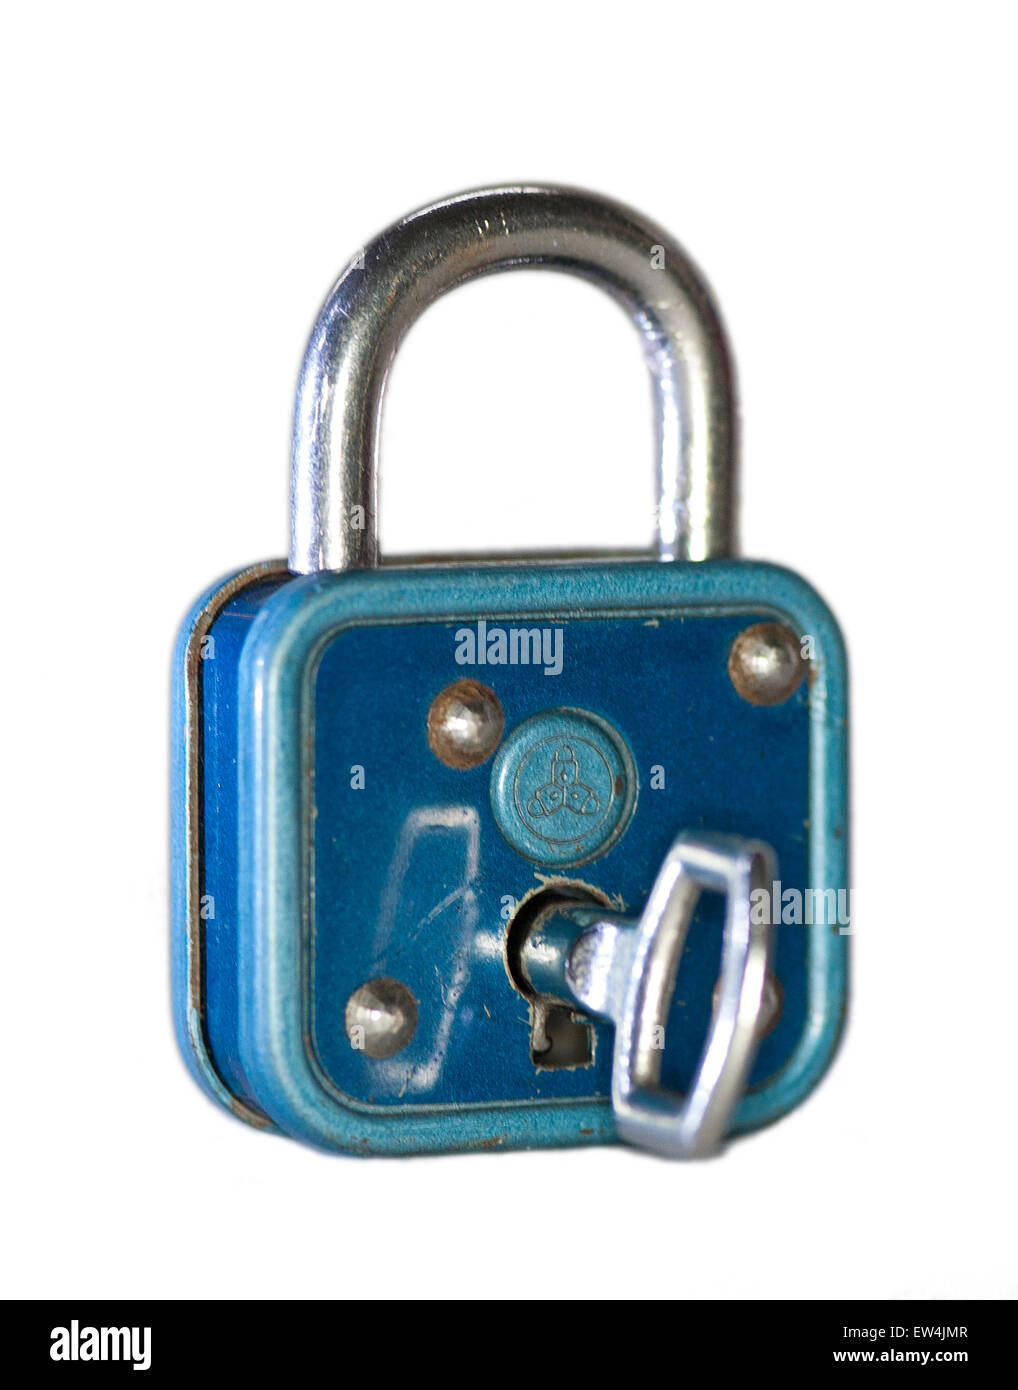 picks to open padlocks and locks: tools for thieves and burglars. theft Stock Photo